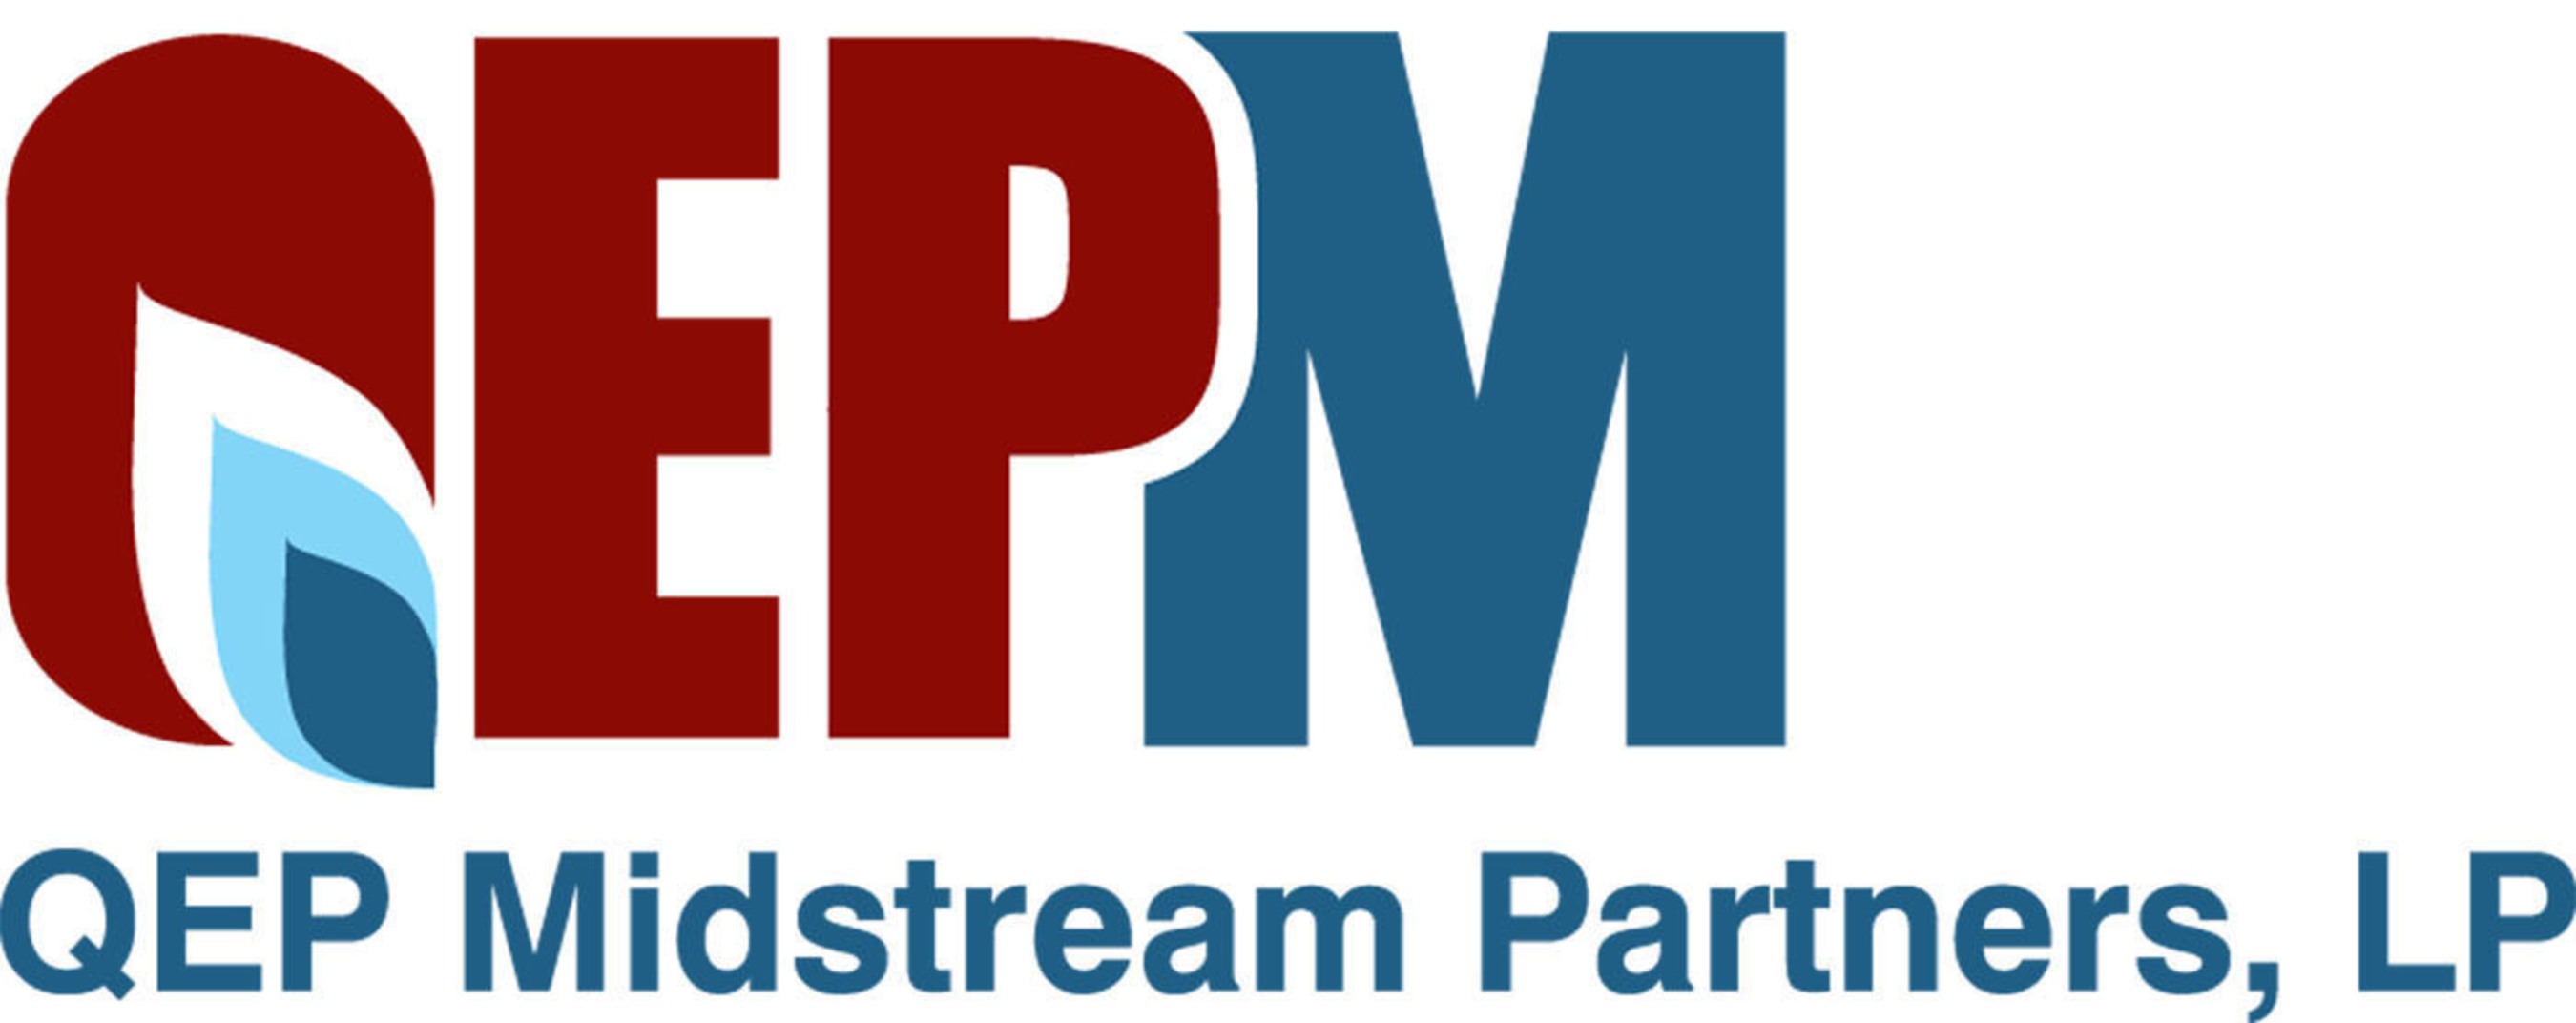 QEP Midstream Partners, LP logo. (PRNewsFoto/QEP Midstream Partners, LP) (PRNewsFoto/)